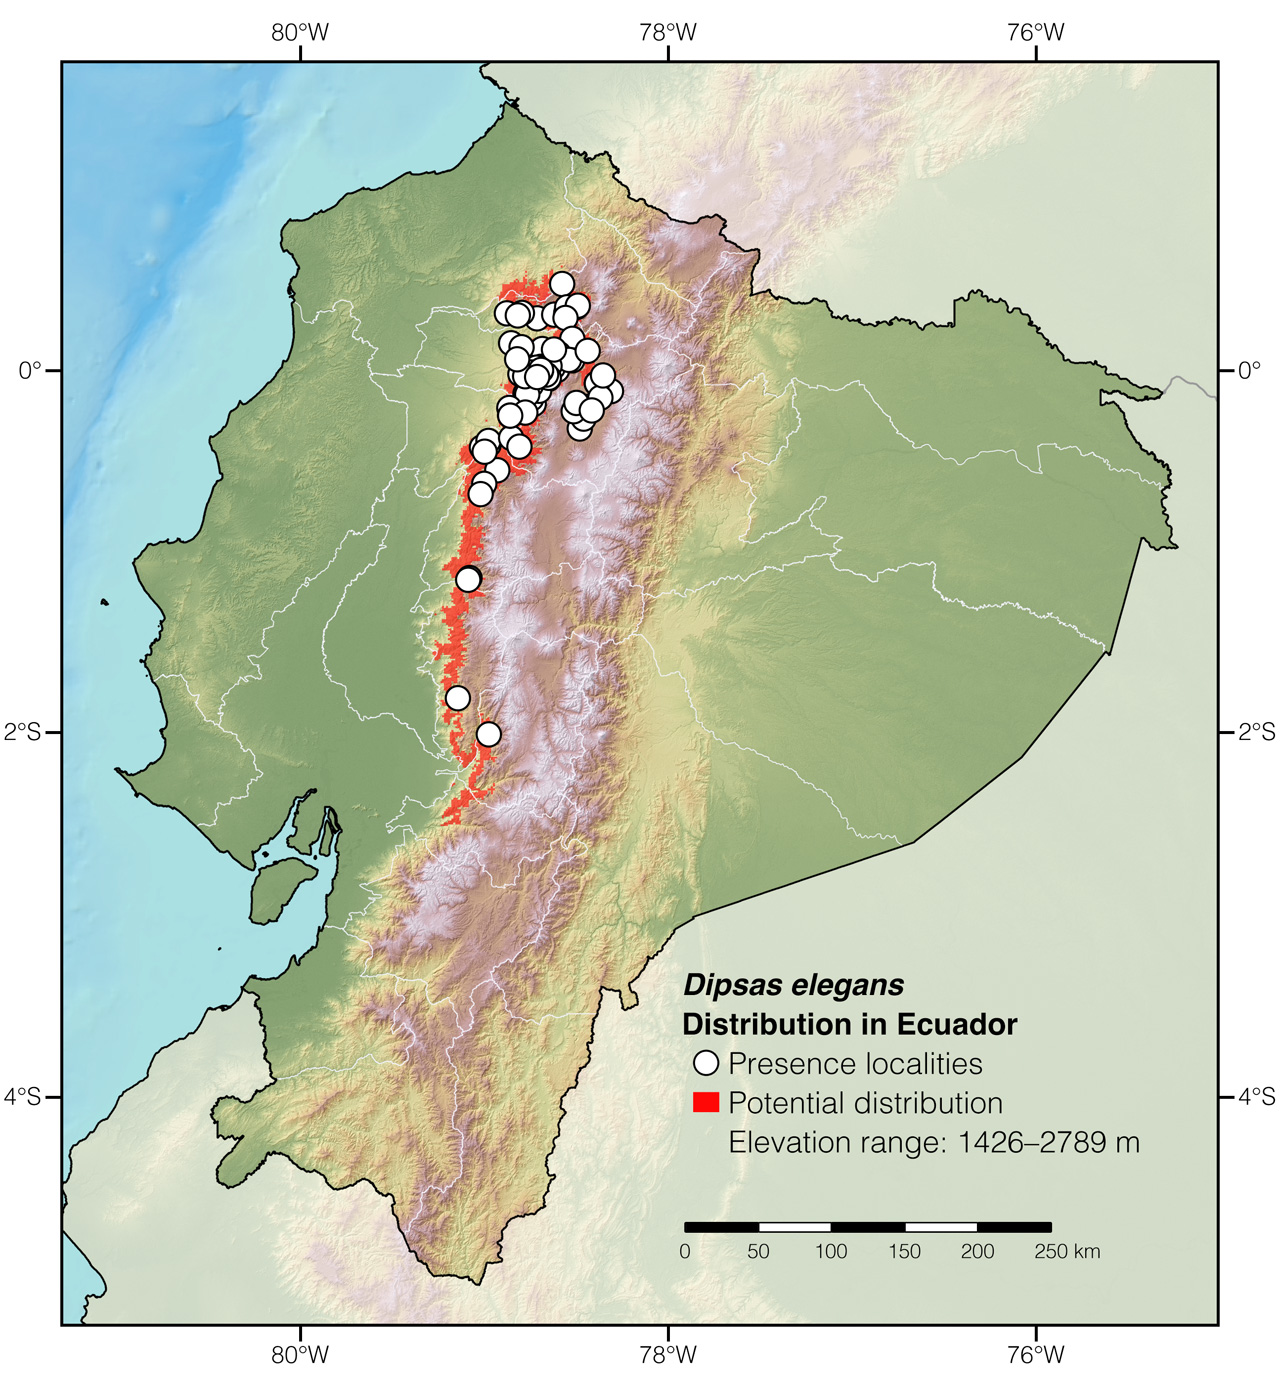 Distribution of Dipsas elegans in Ecuador